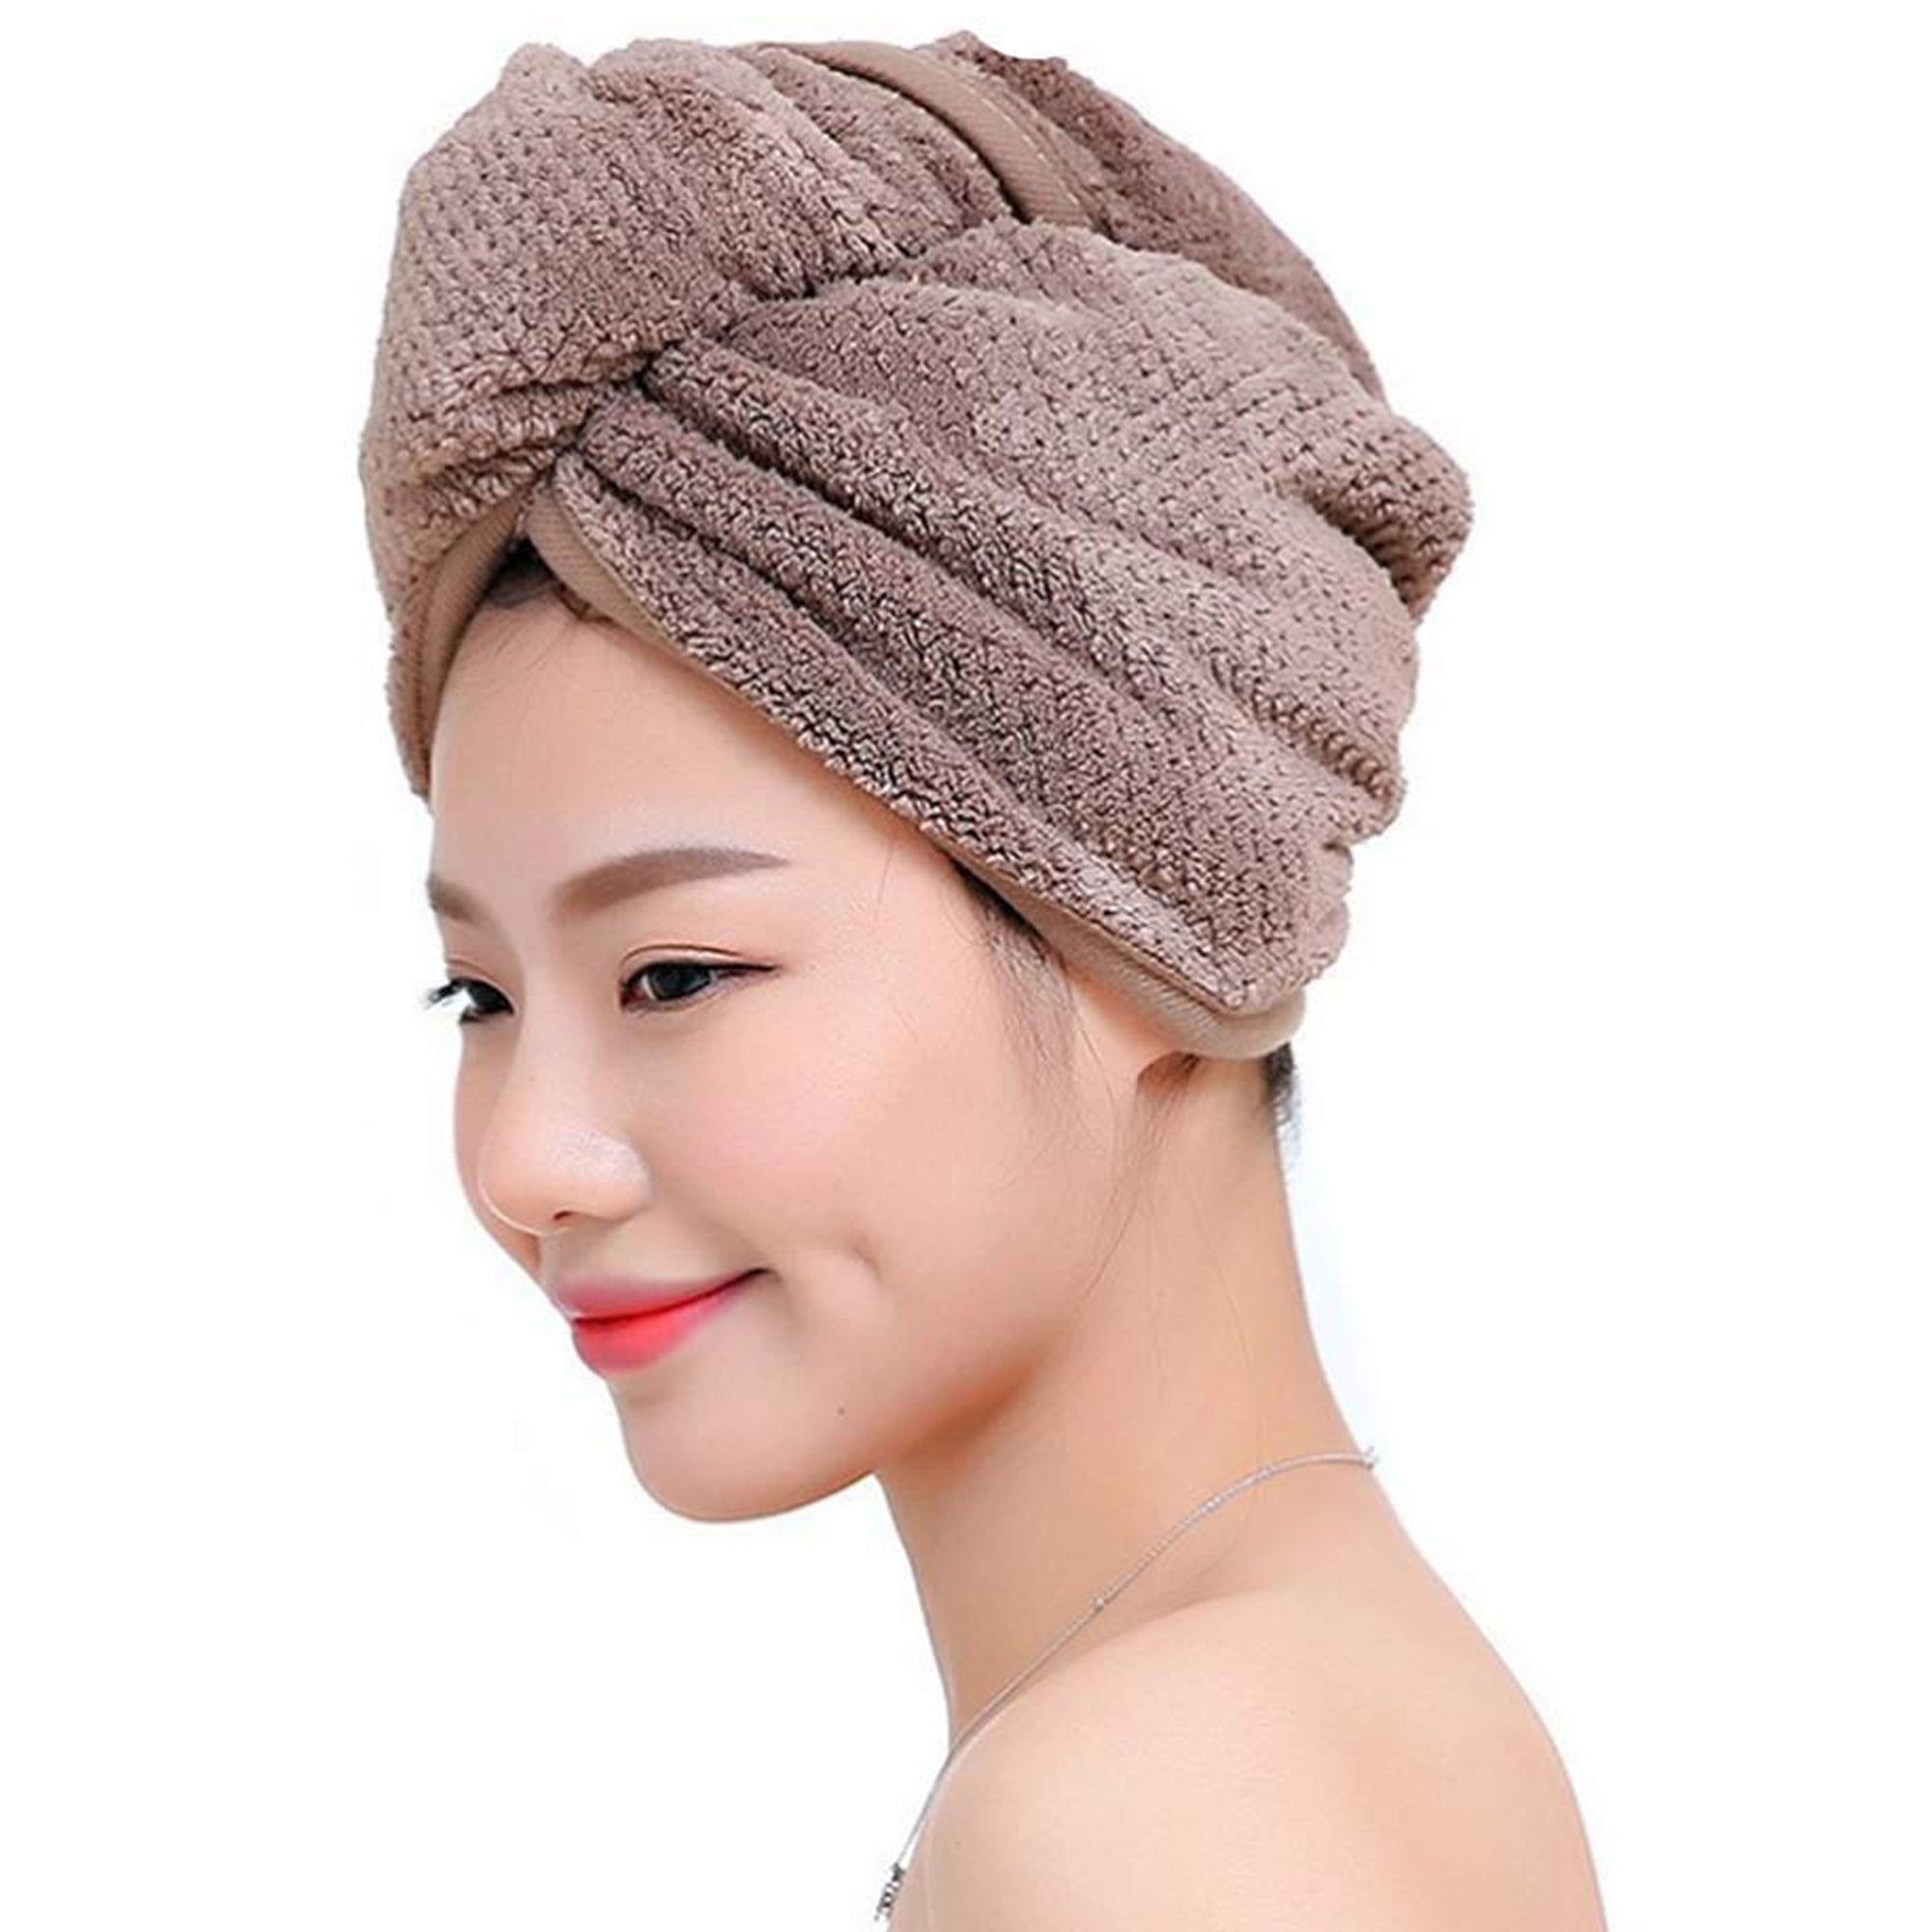 Microfiber Hair Turban Quickly Dry Hair Hat Wrapped Towel Bathing Cap DIY Spa 